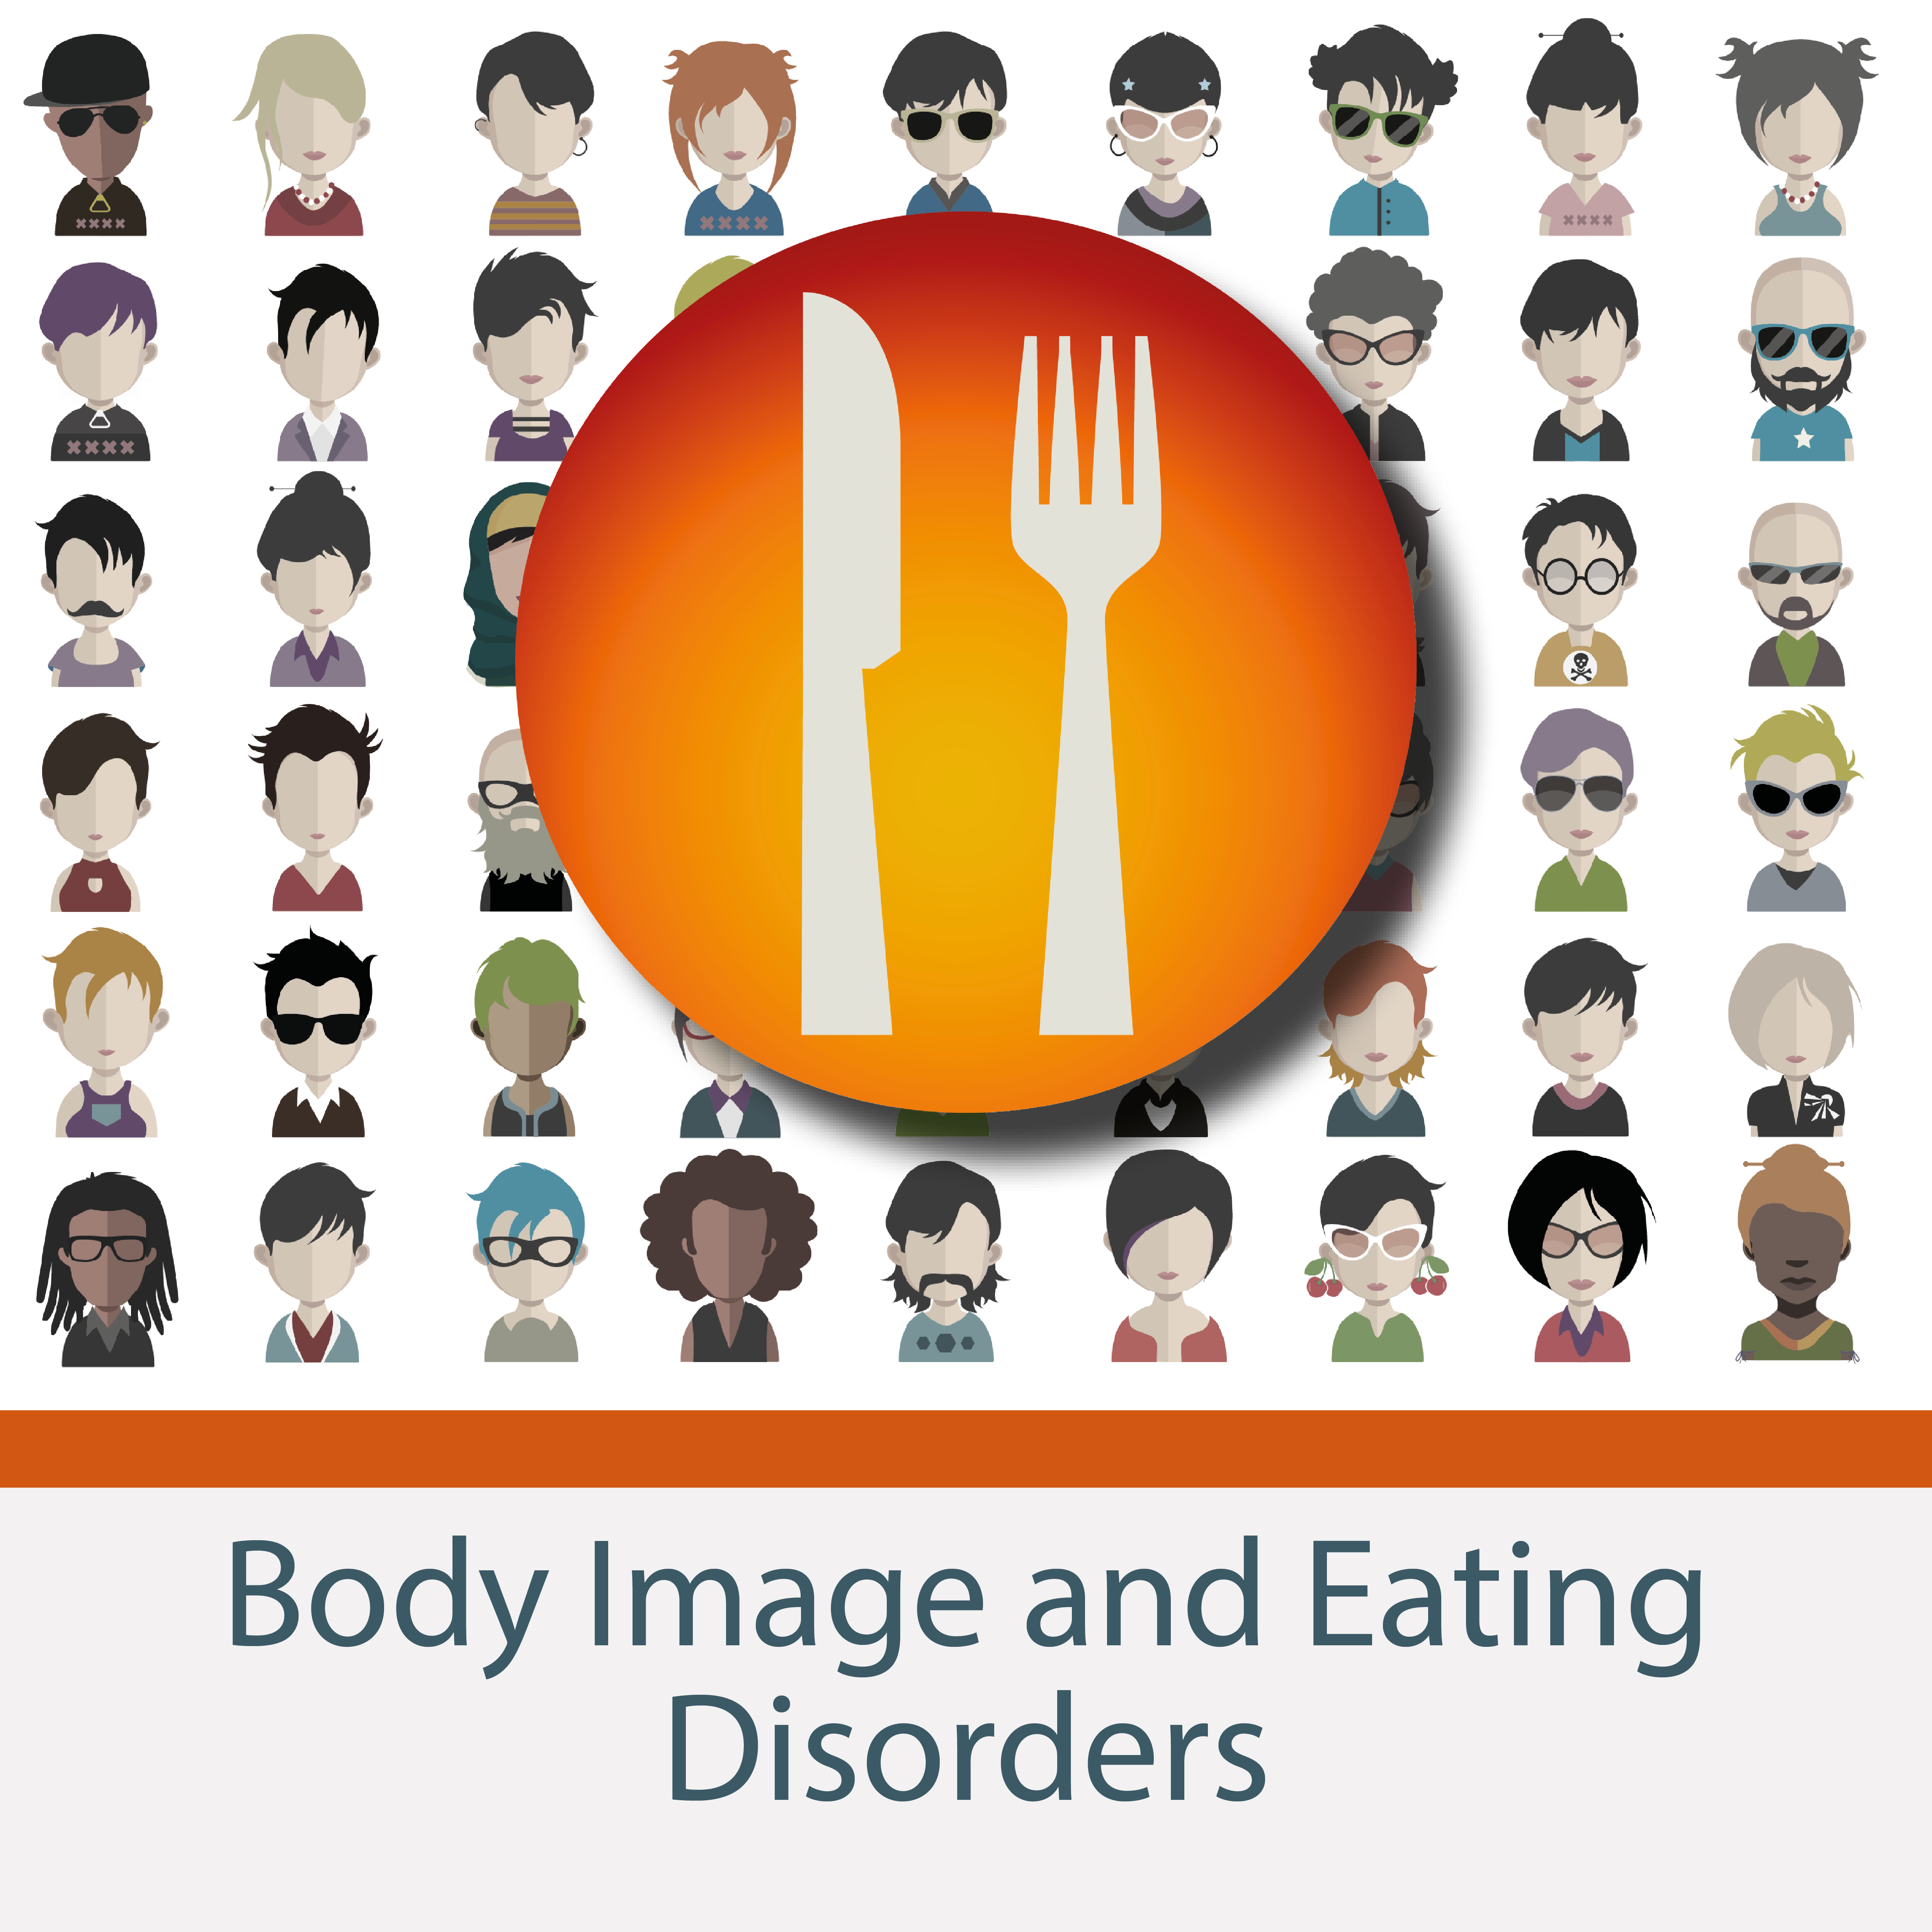 Body Image & Eating Disorders